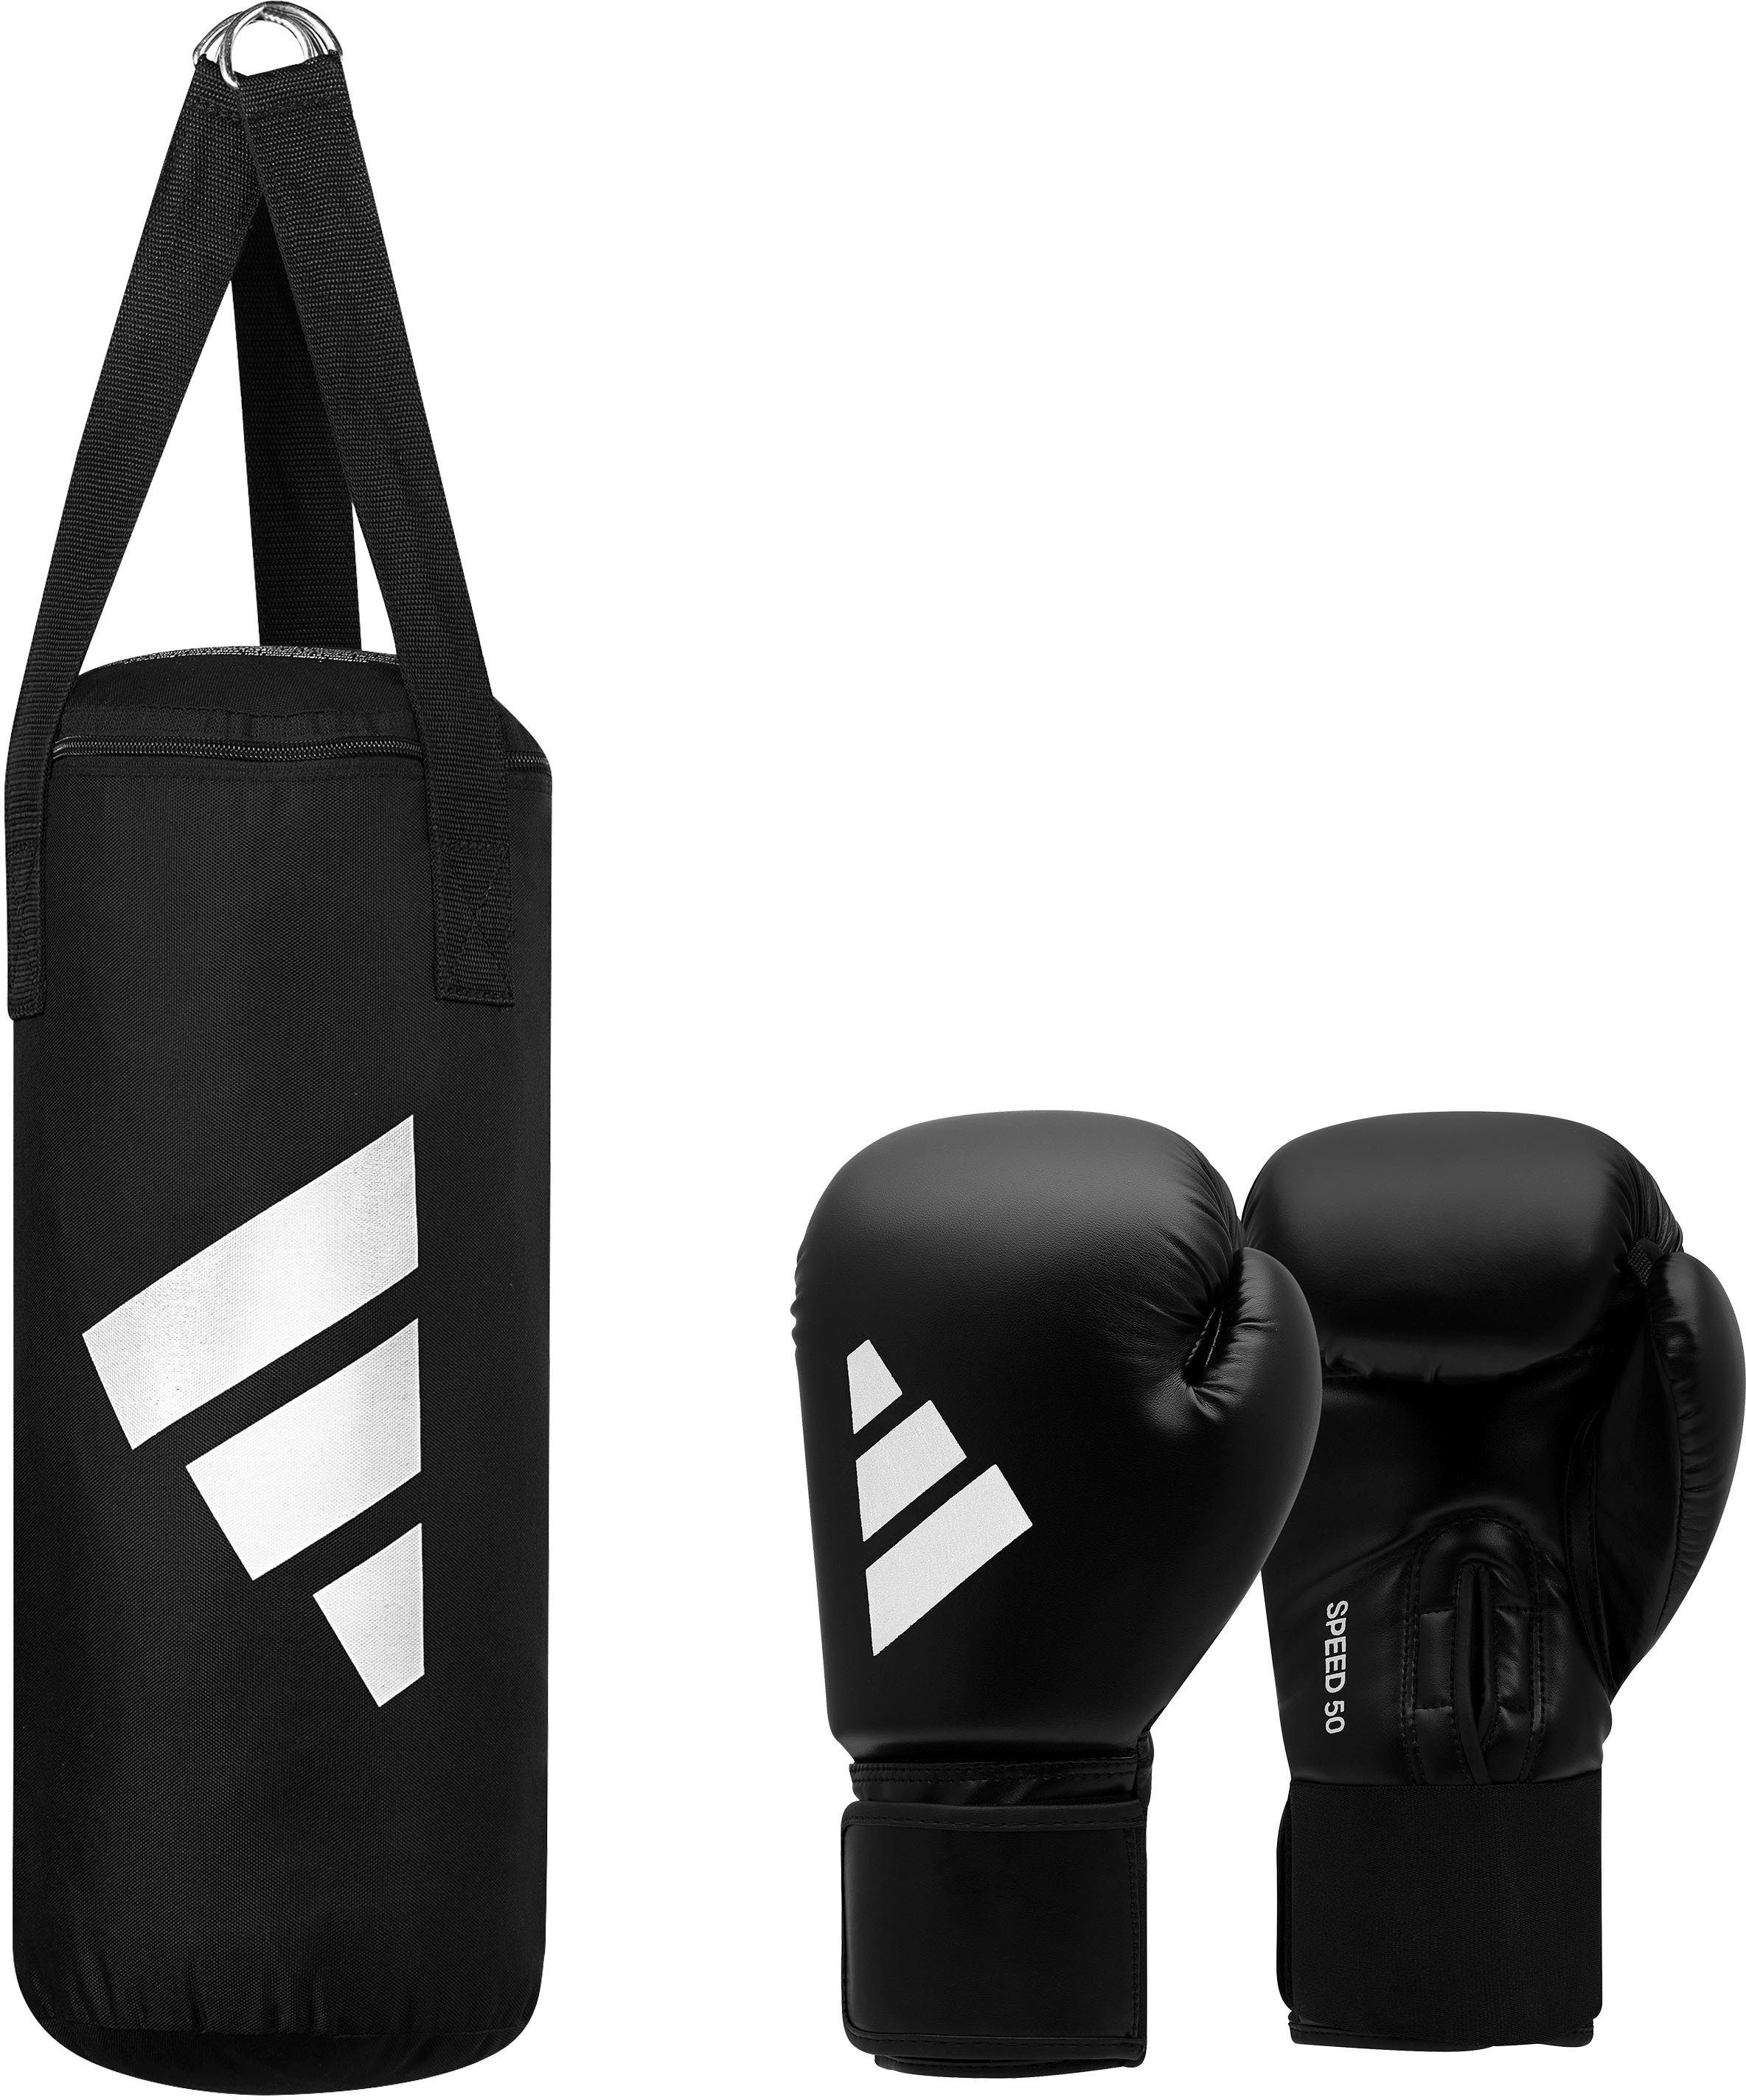 Boxsack Youth adidas Performance Boxhandschuhen) Set (Set, mit Boxing